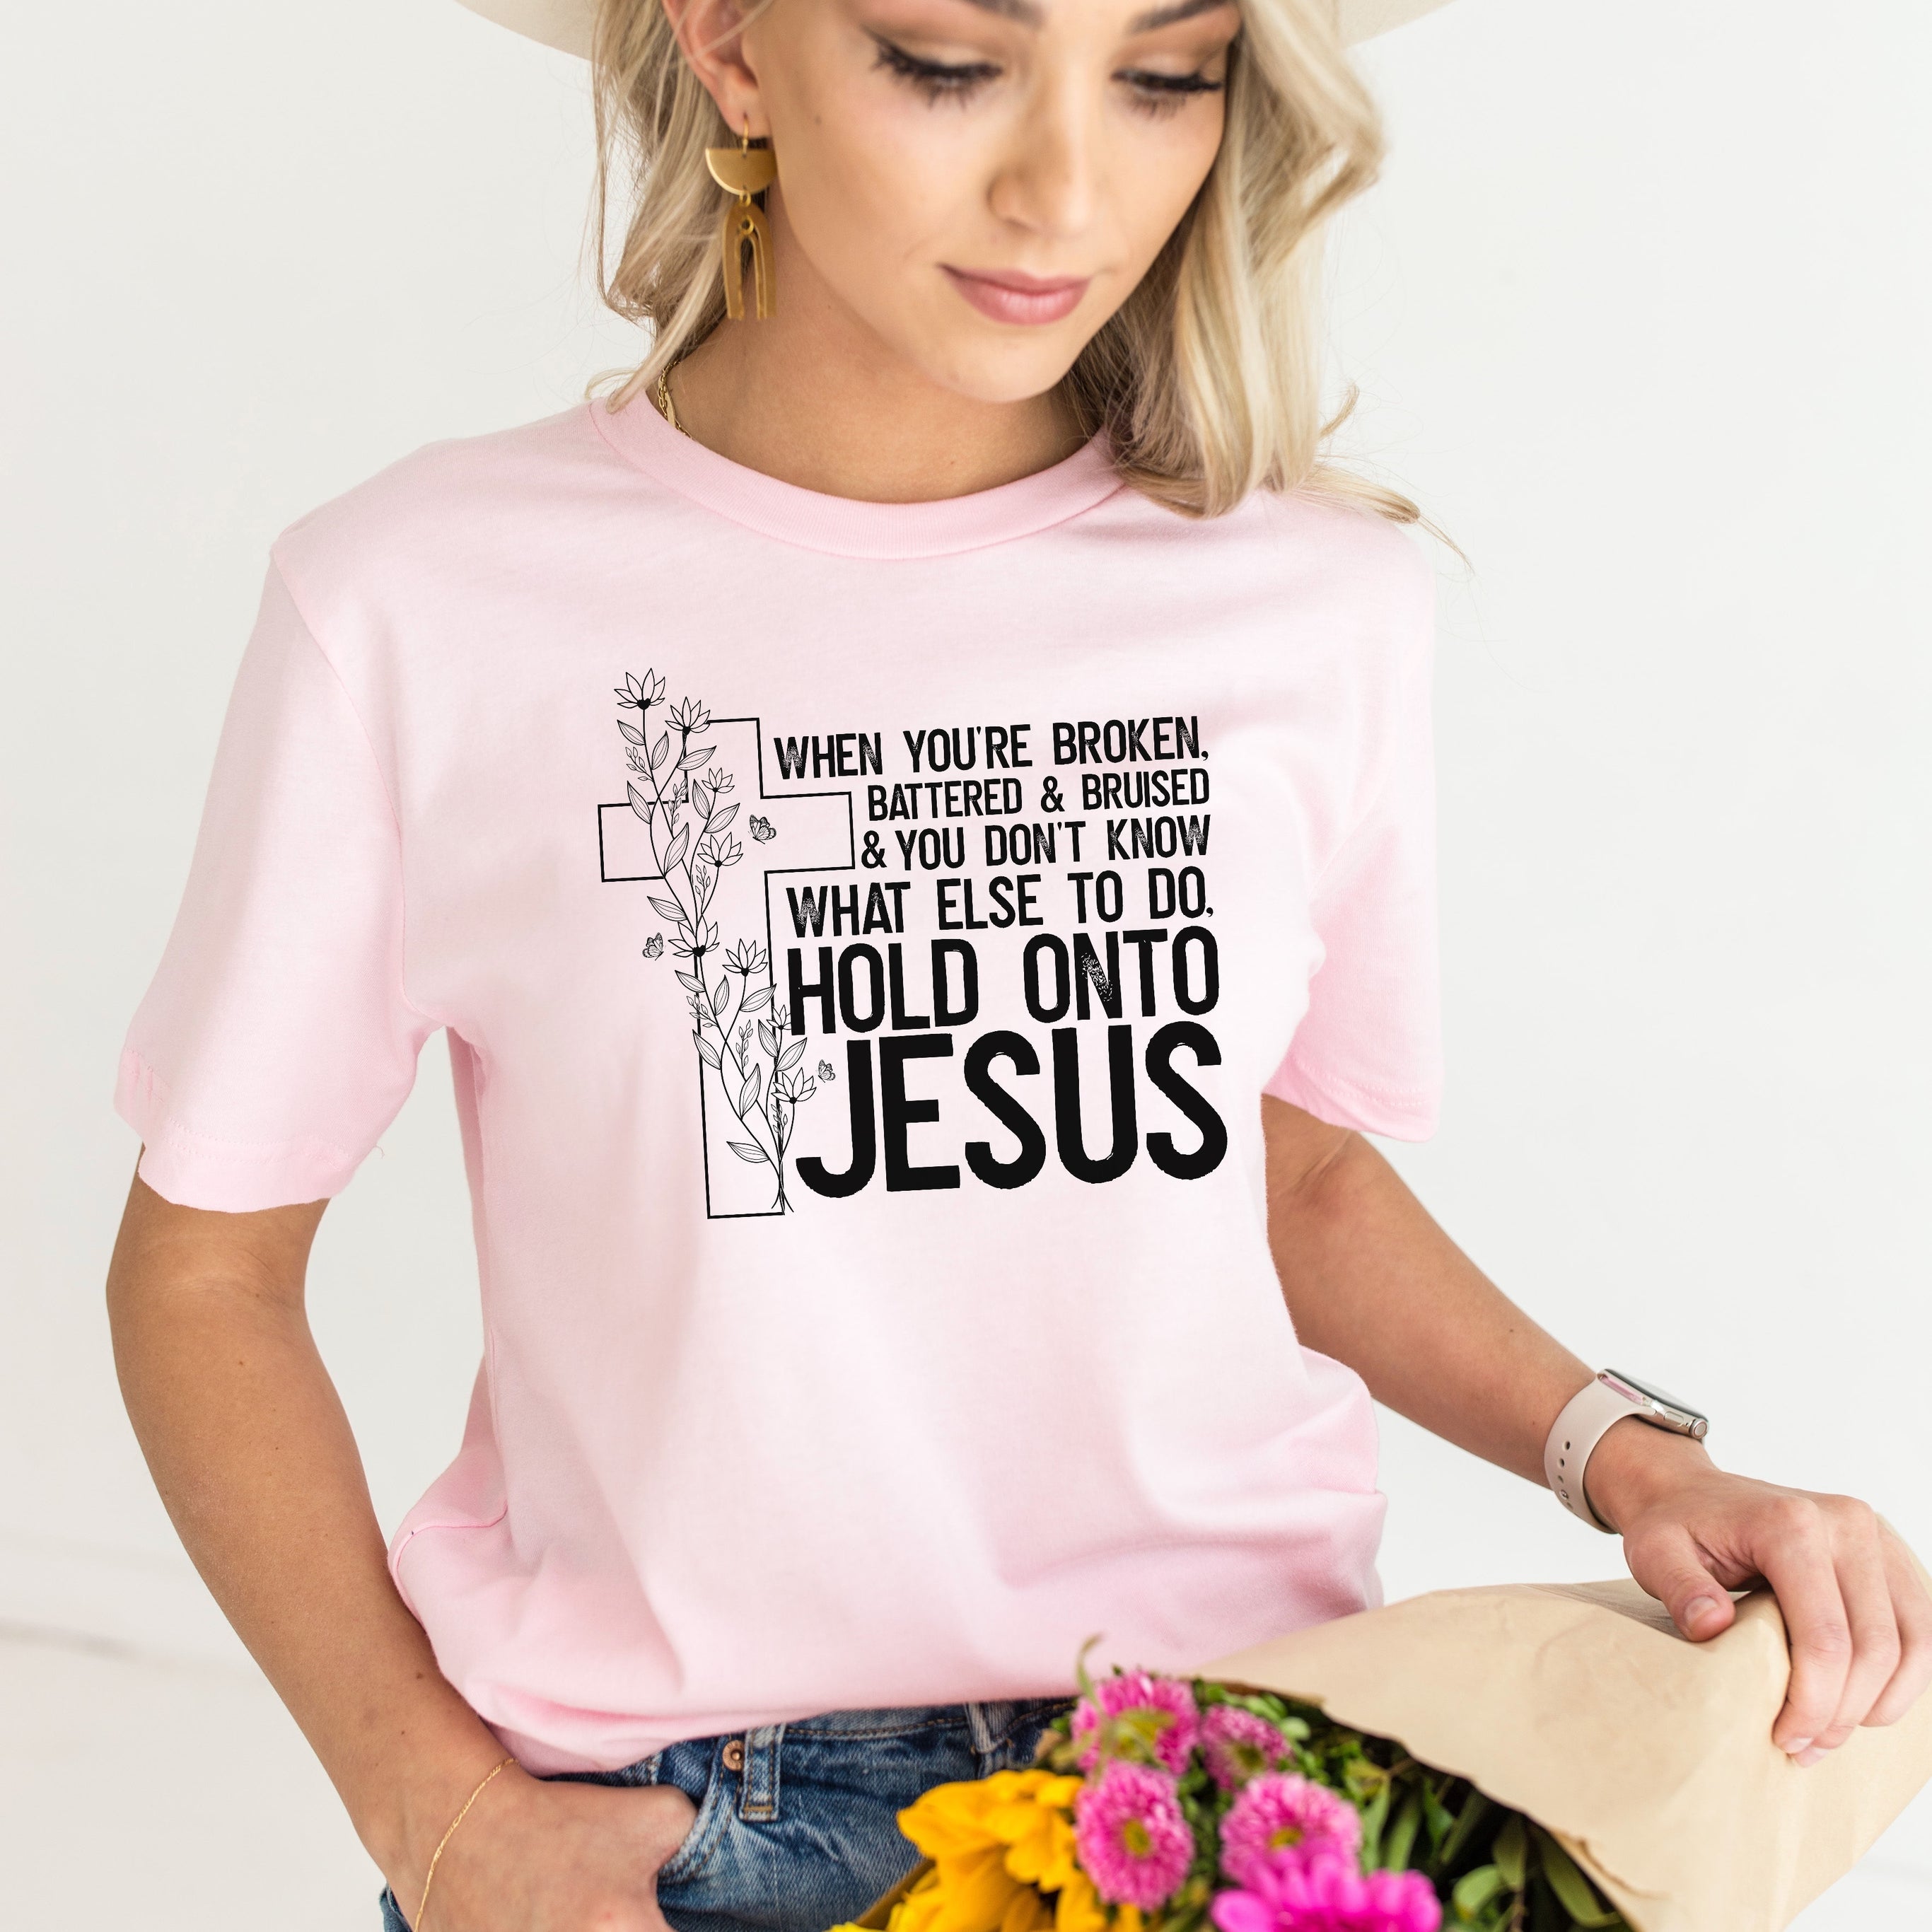 Hold onto Jesus Screen Print (G4)